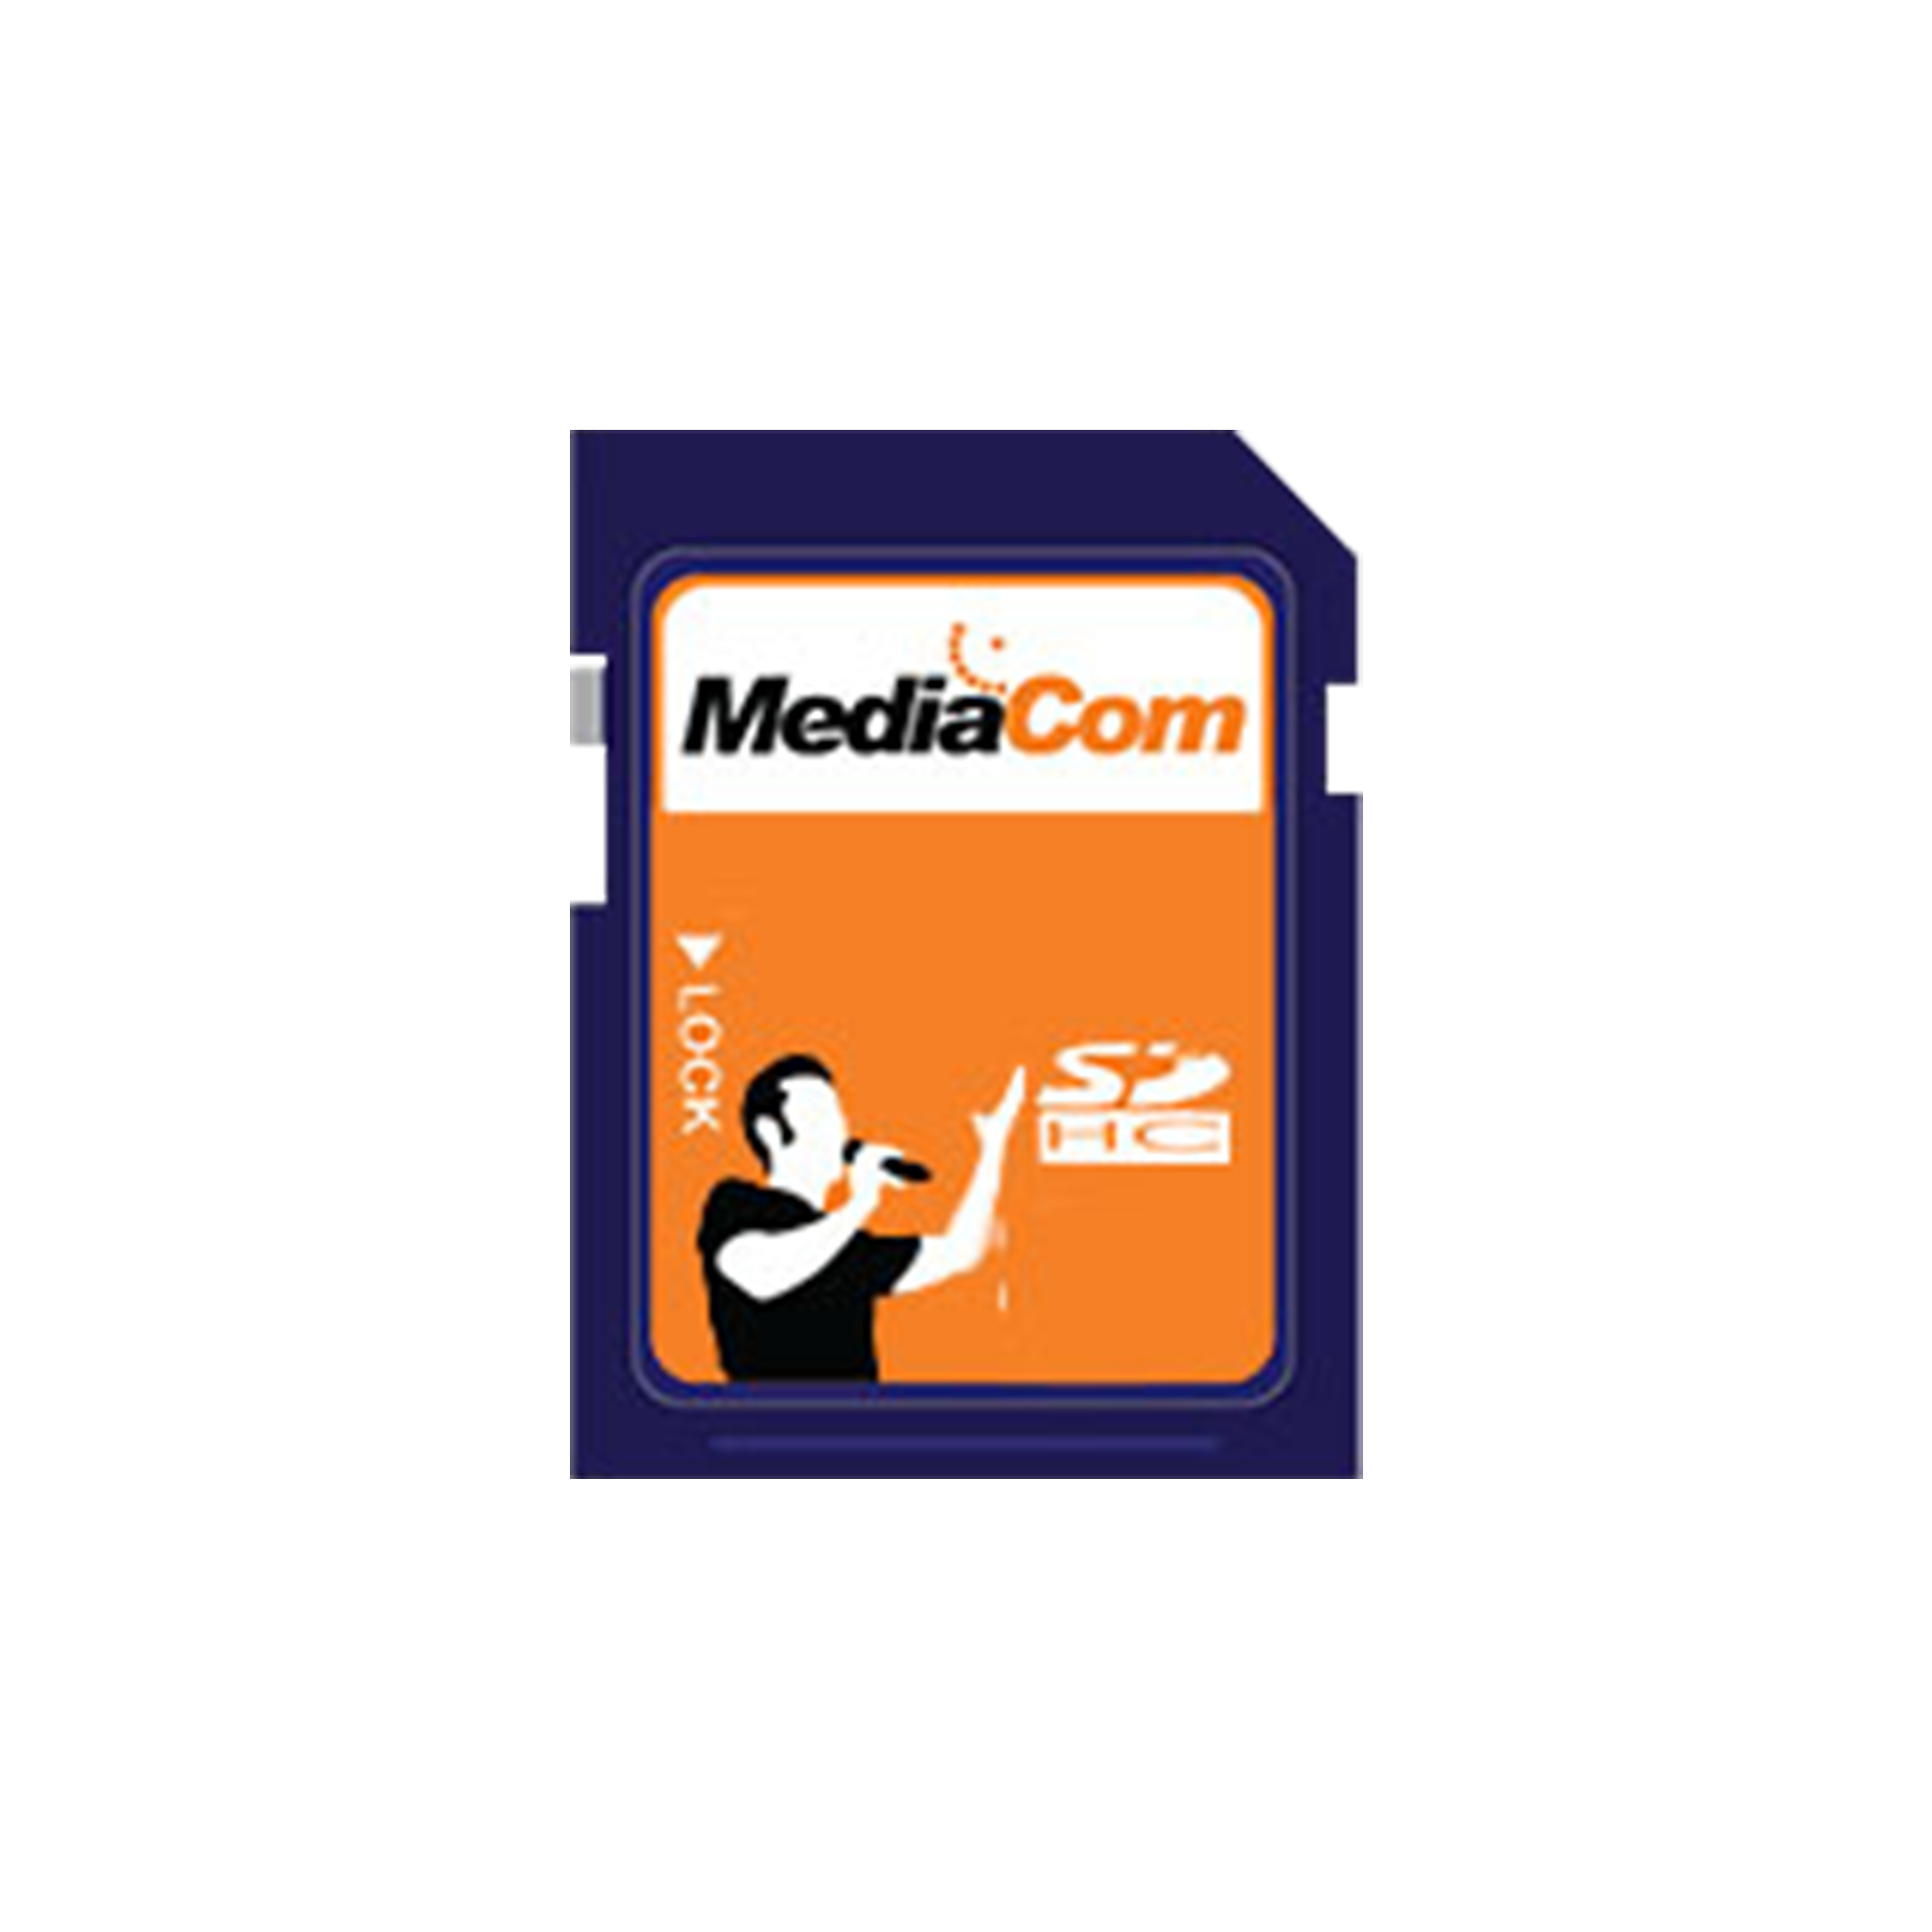 Upgrade for English or Hindi SD Card for MCI 3300, MCI SD Porto